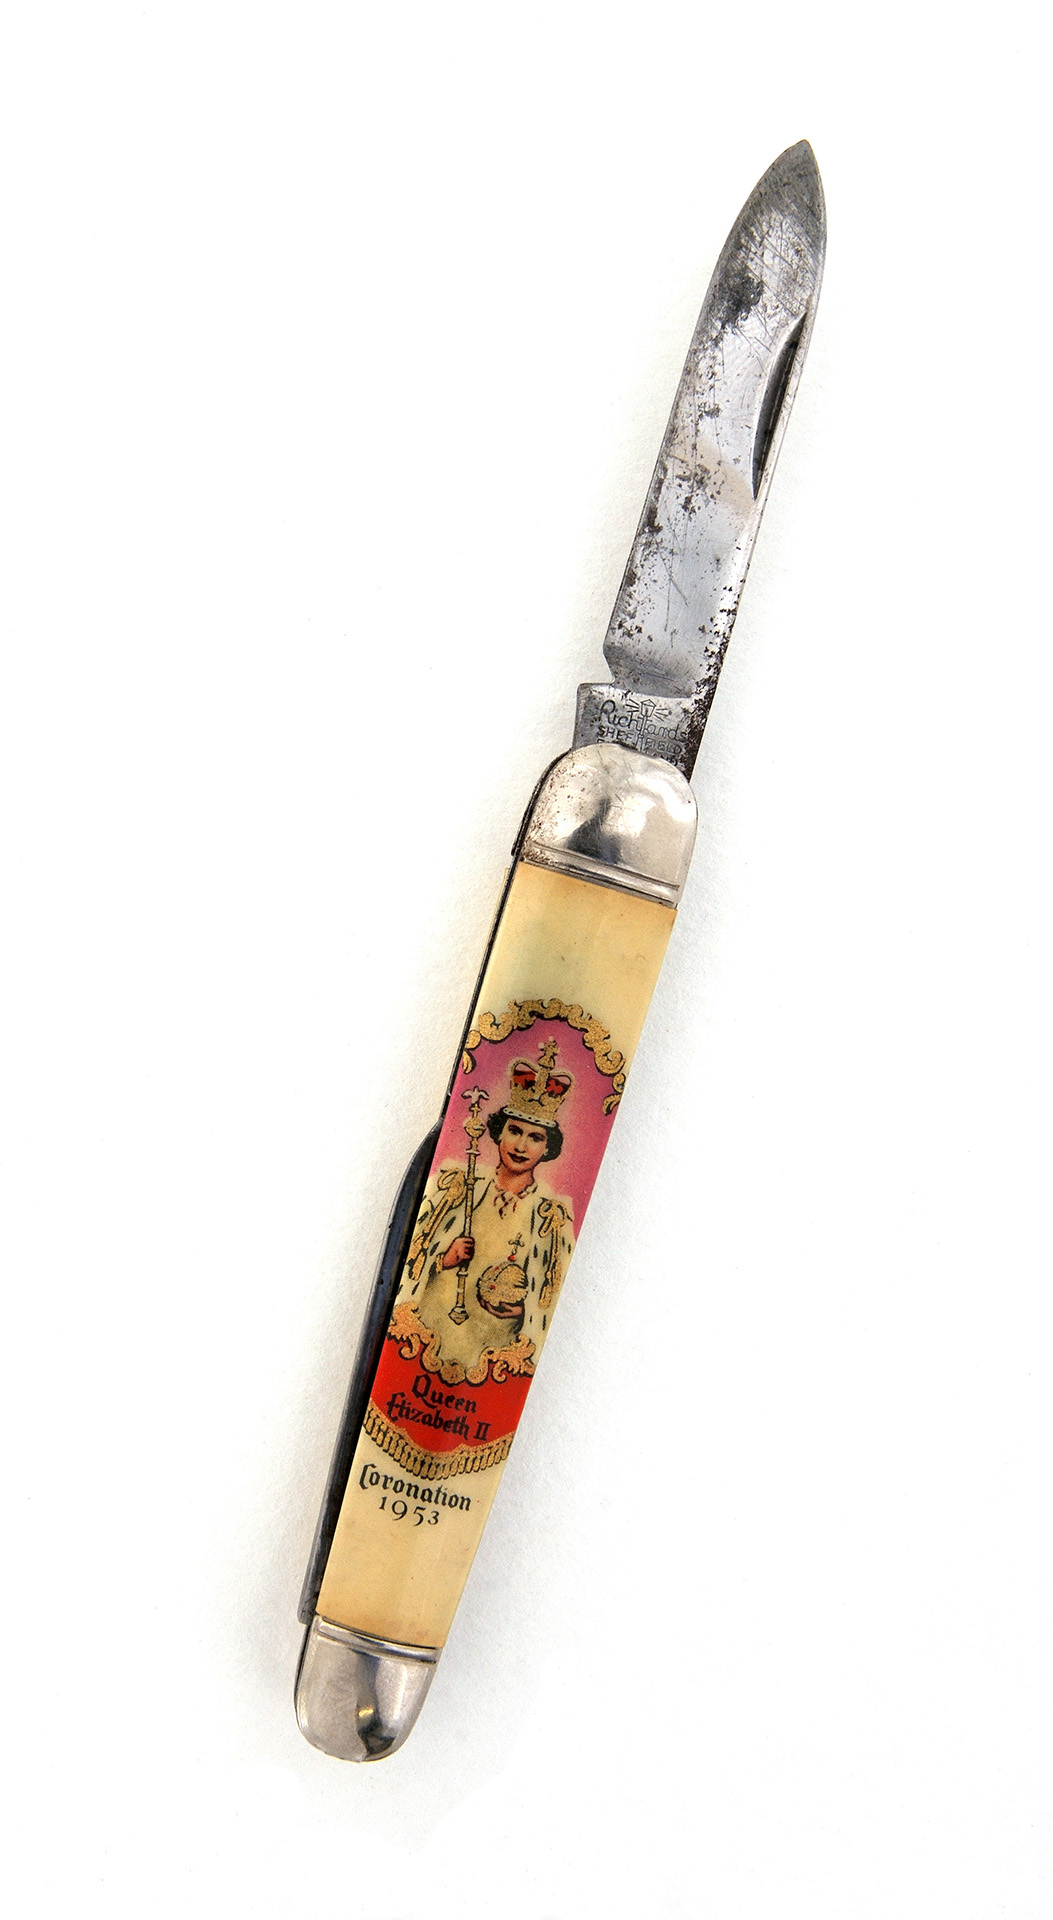 Souvenir Penknife For Queen Elizabeth’S Coronation, By Richard Bros. & Sons Ltd. Of Sheffield Photo © Museums Sheffield